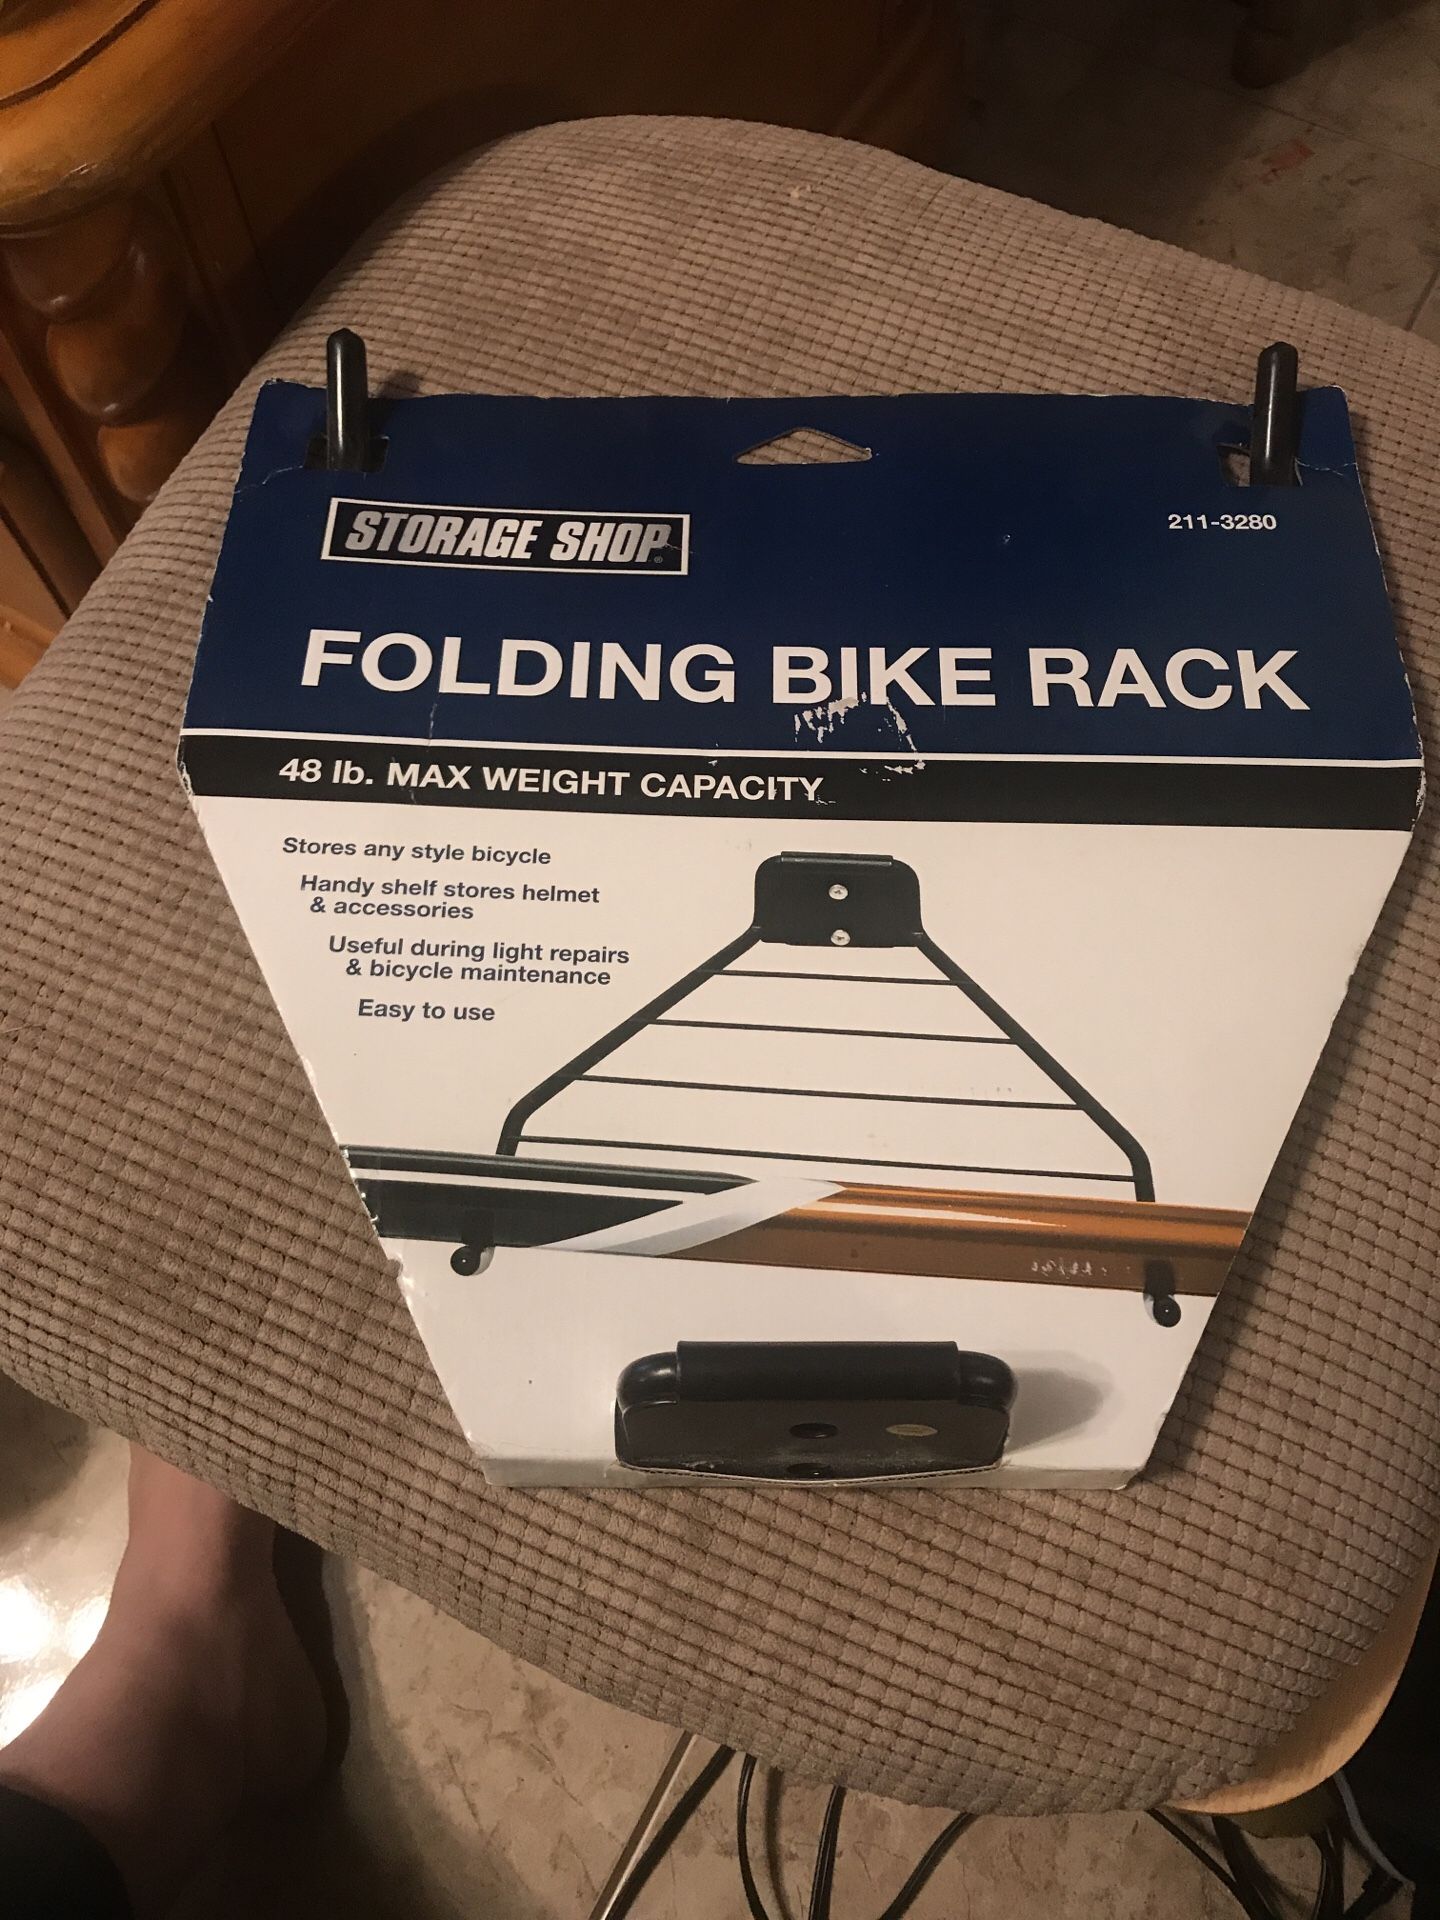 Folding bike rack storage shop